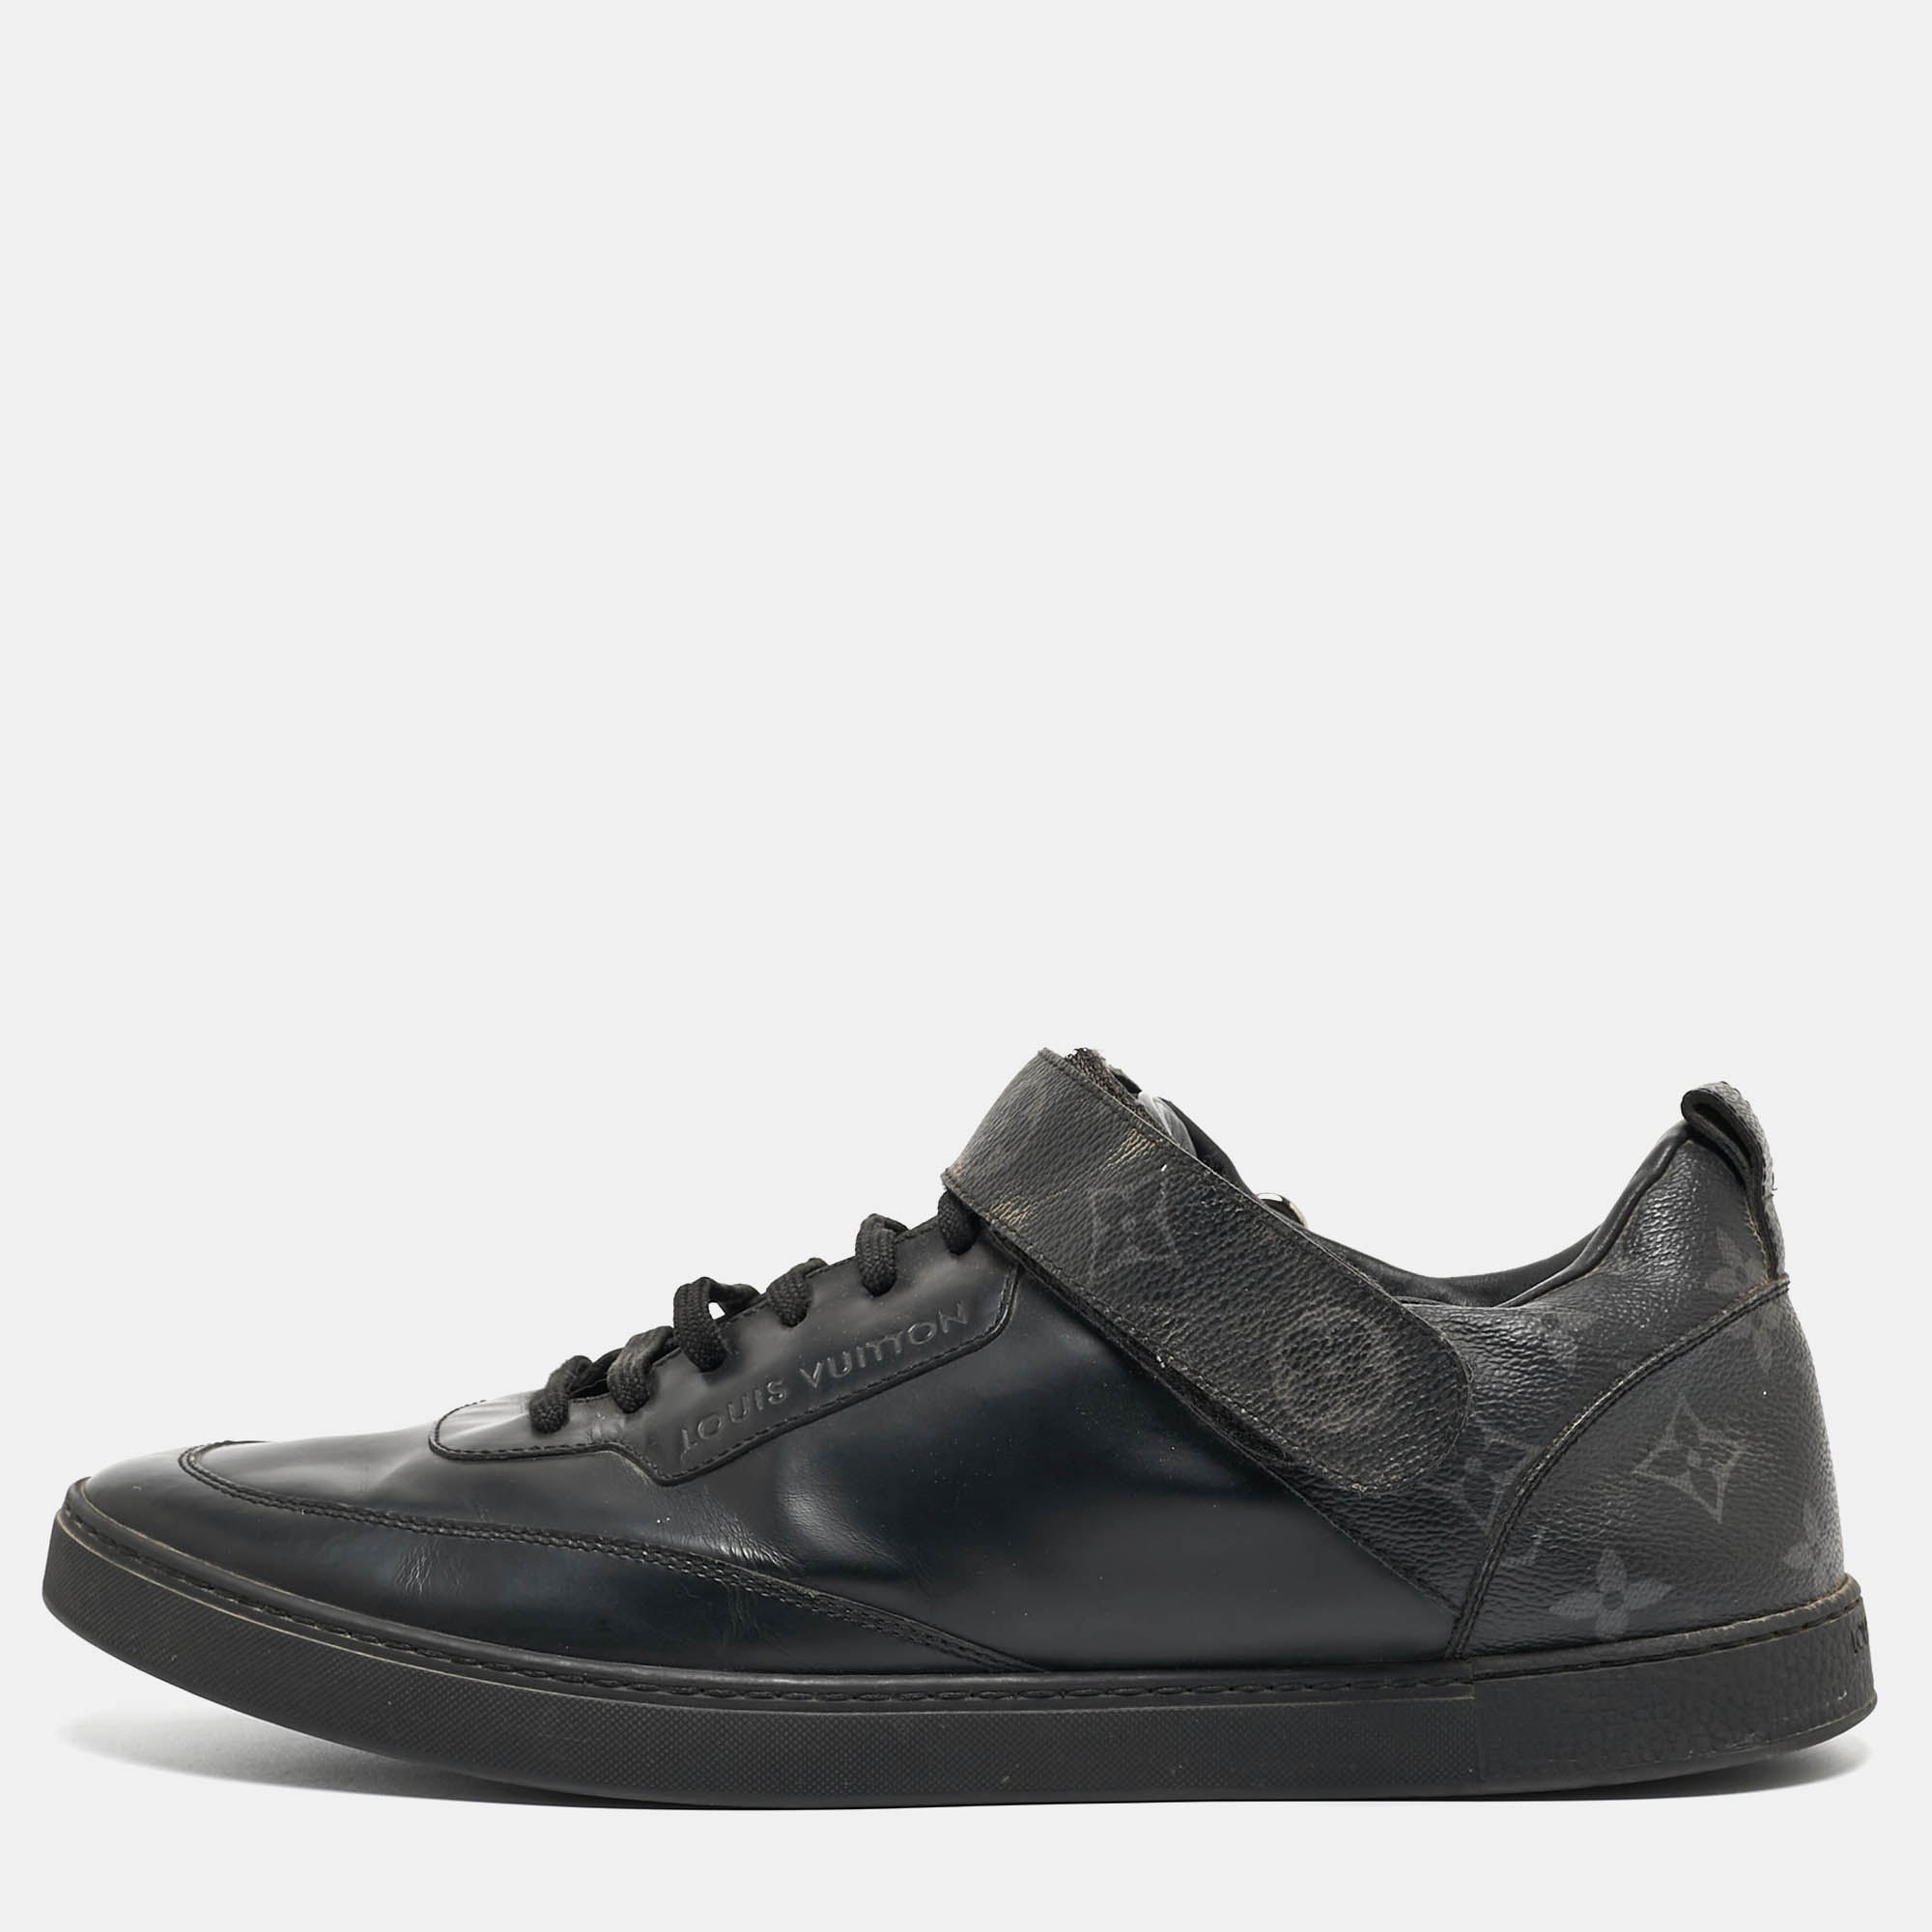 Louis Vuitton Black Leather And Monogram Canvas Passenger Sneakers Size 42.5